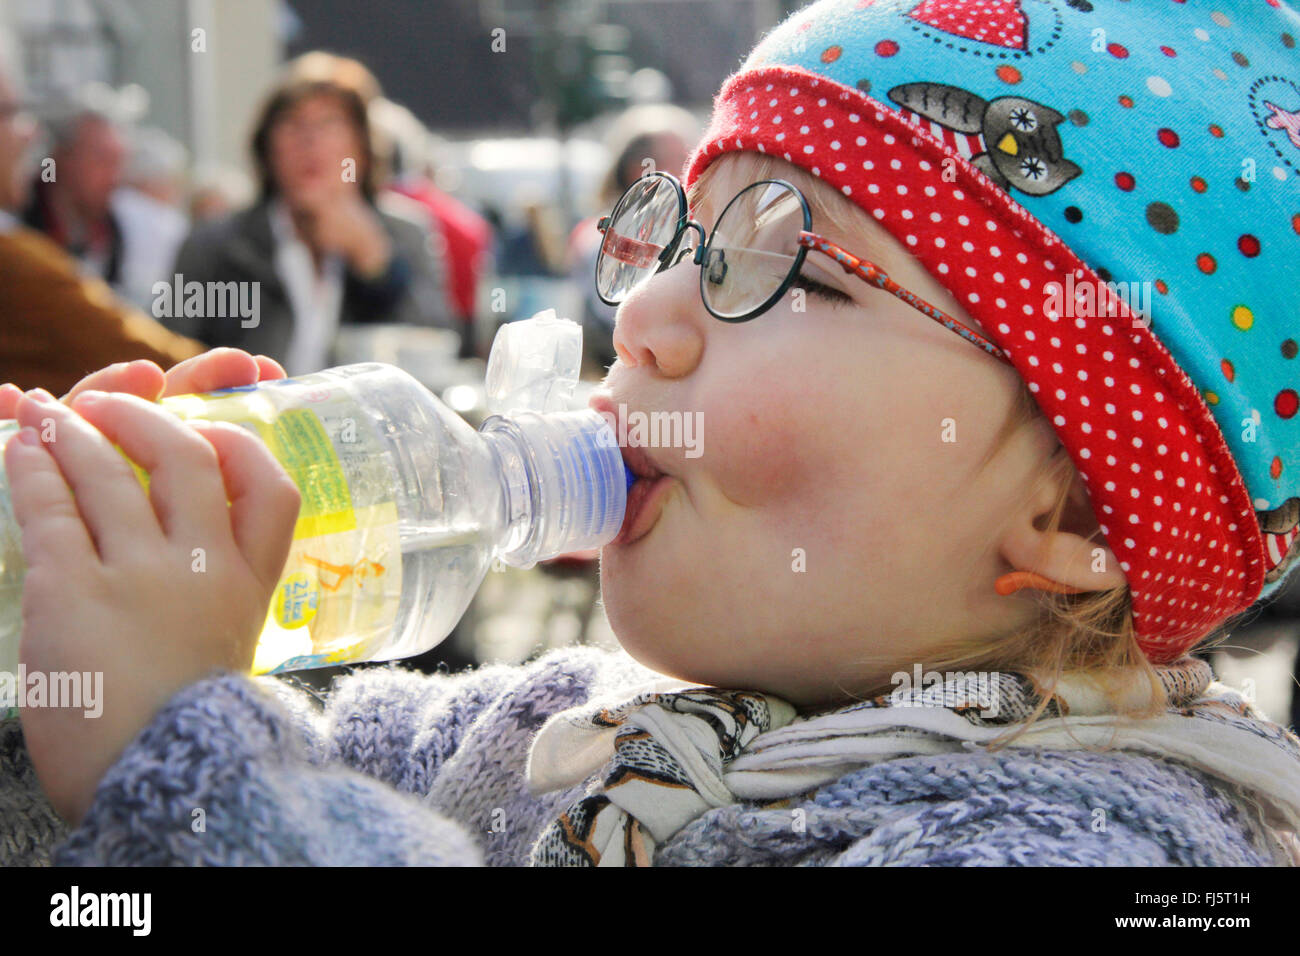 https://c8.alamy.com/comp/FJ5T1H/little-girl-drinking-out-a-bottle-germany-FJ5T1H.jpg